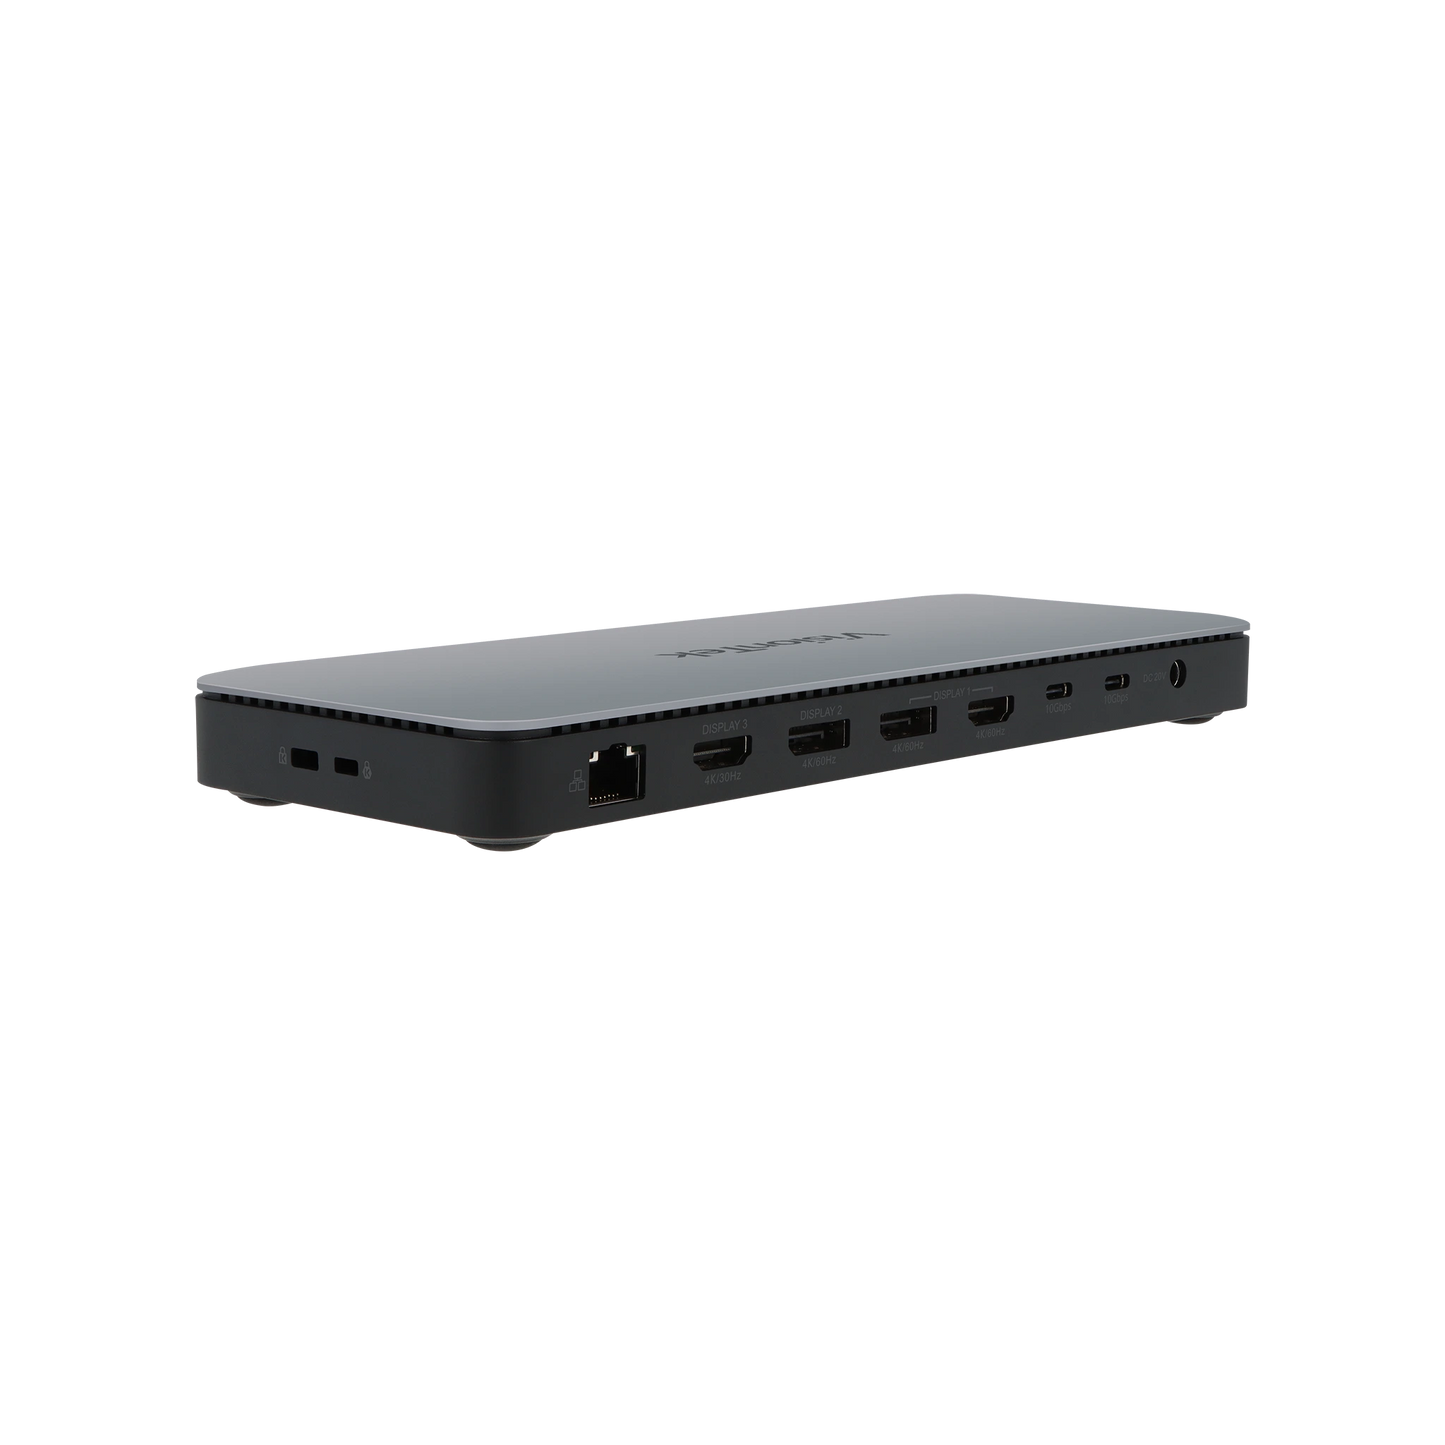 VT2600 USB-C DP 1.4 Docking Station - Multi Display MST Dock 100W Power Delivery